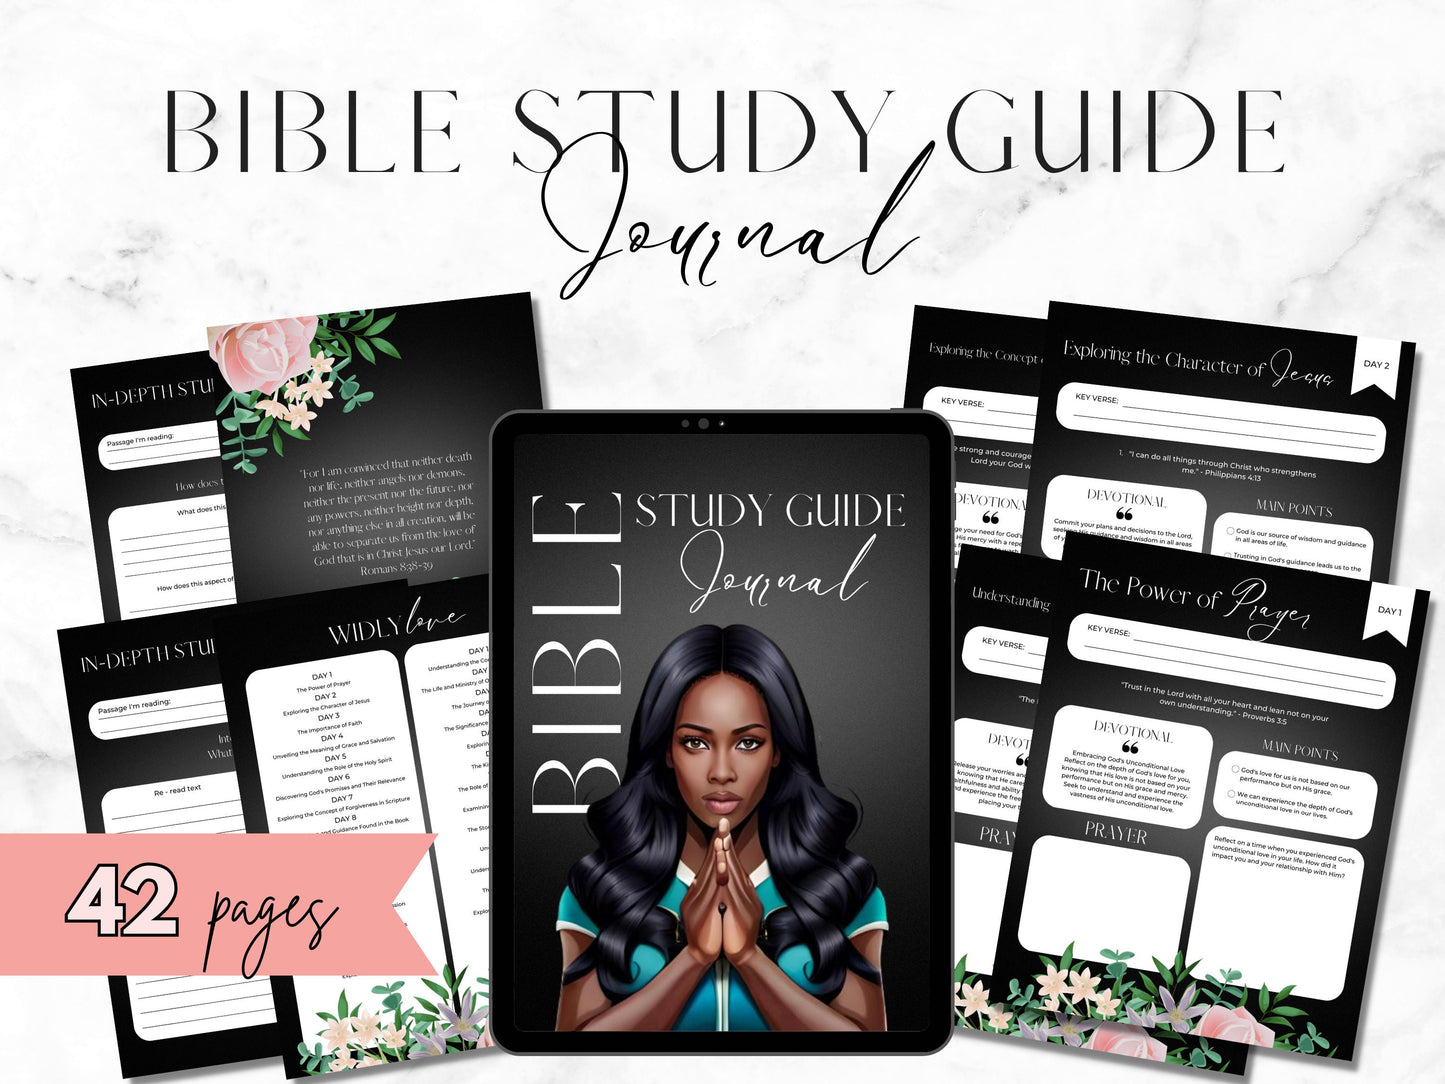 PLR Bible Study Guide Canva Journal Template for Women